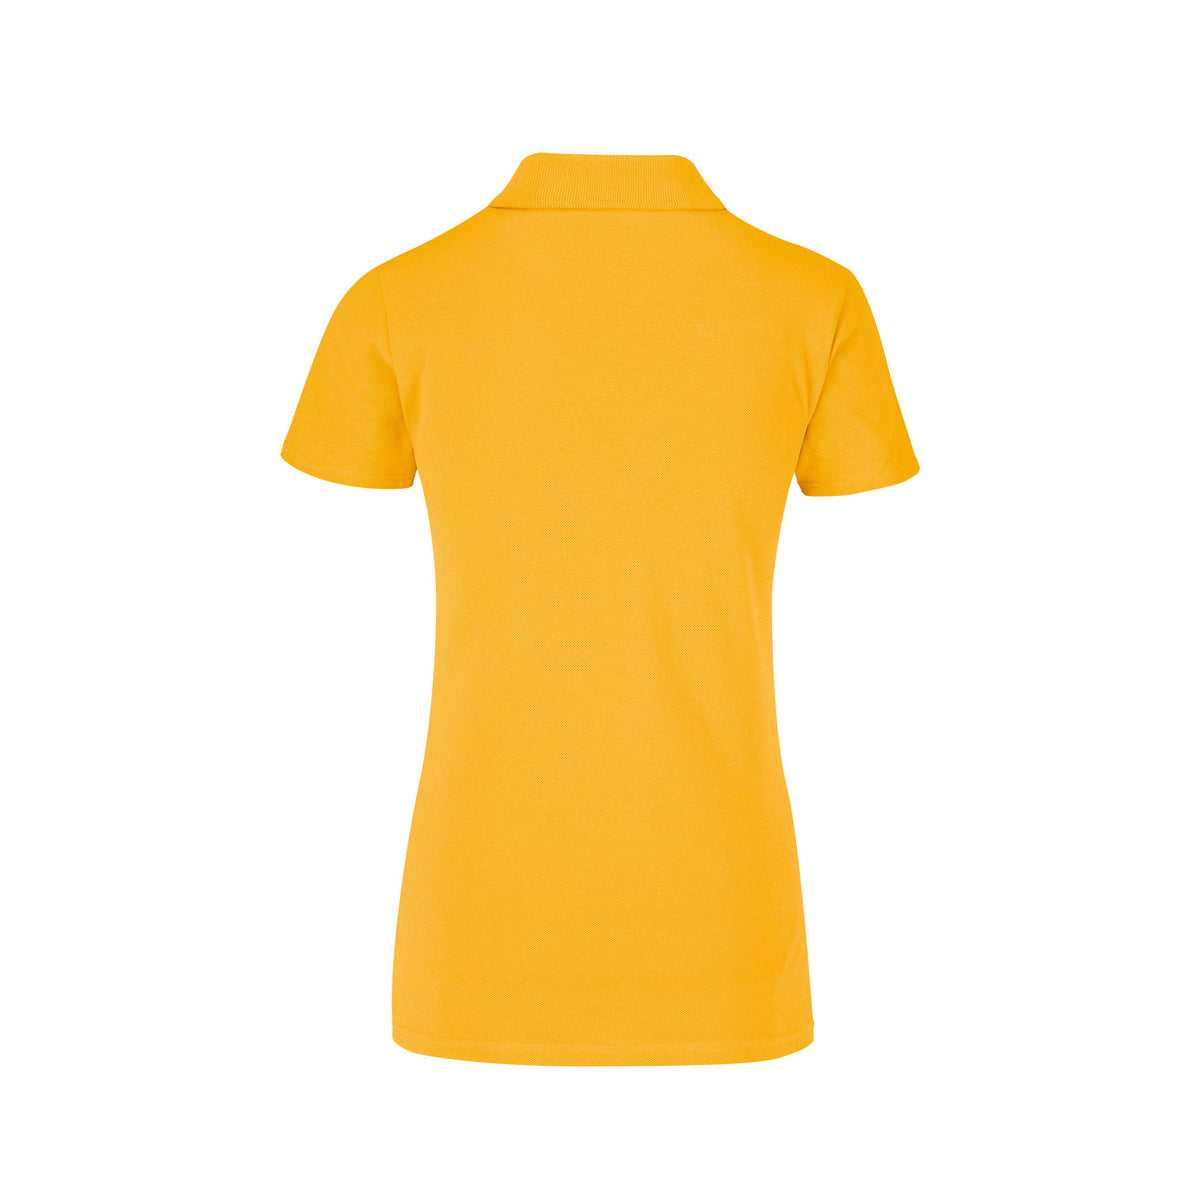 Women’s Silhouette Sport Shirt (Mango) – Yazbek USA Mint